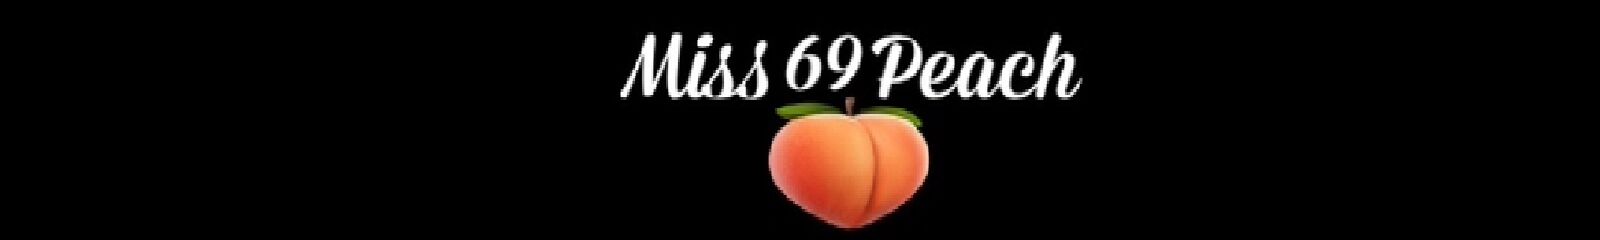 Miss 69 Peach uncensored